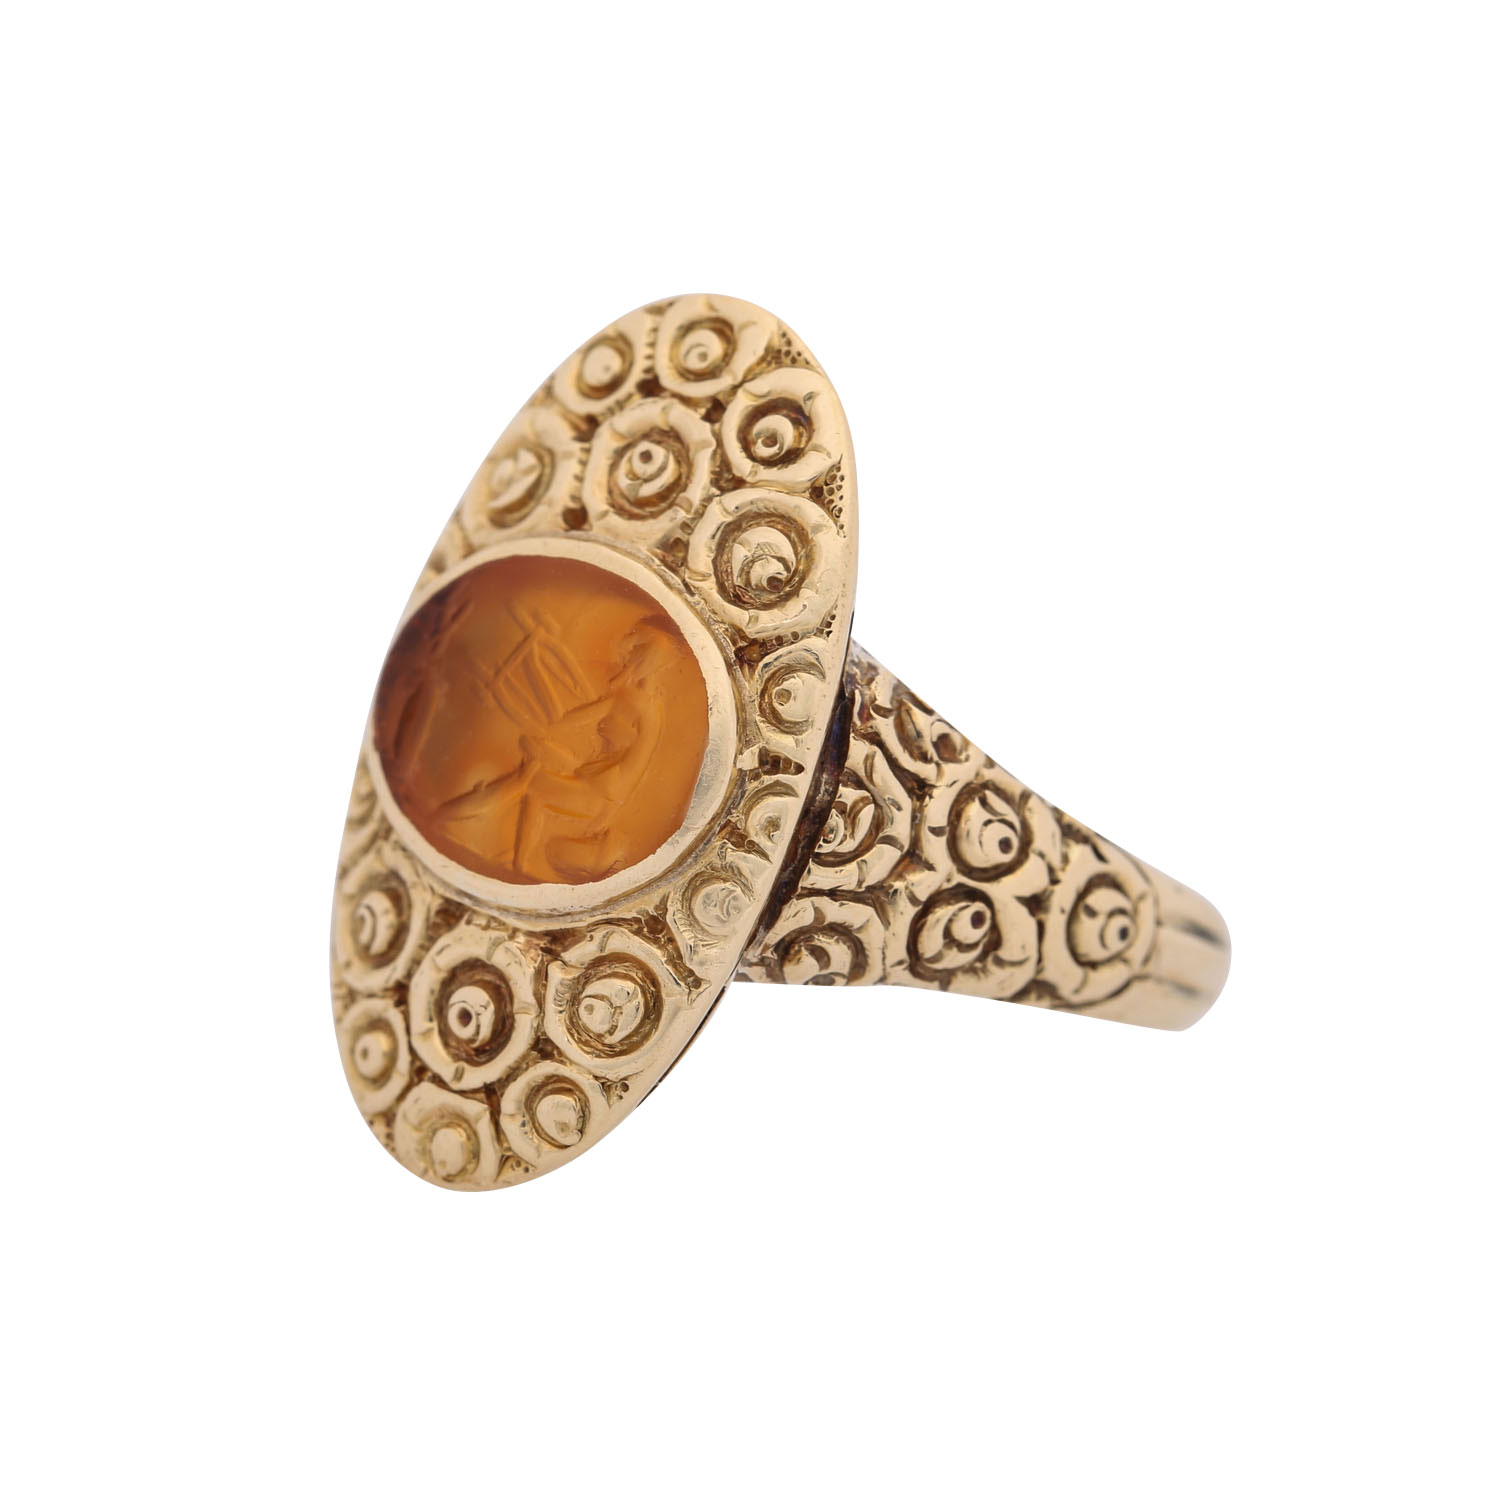 Unikat Ring mit römisch-antiker Karneolgemme - Image 3 of 3